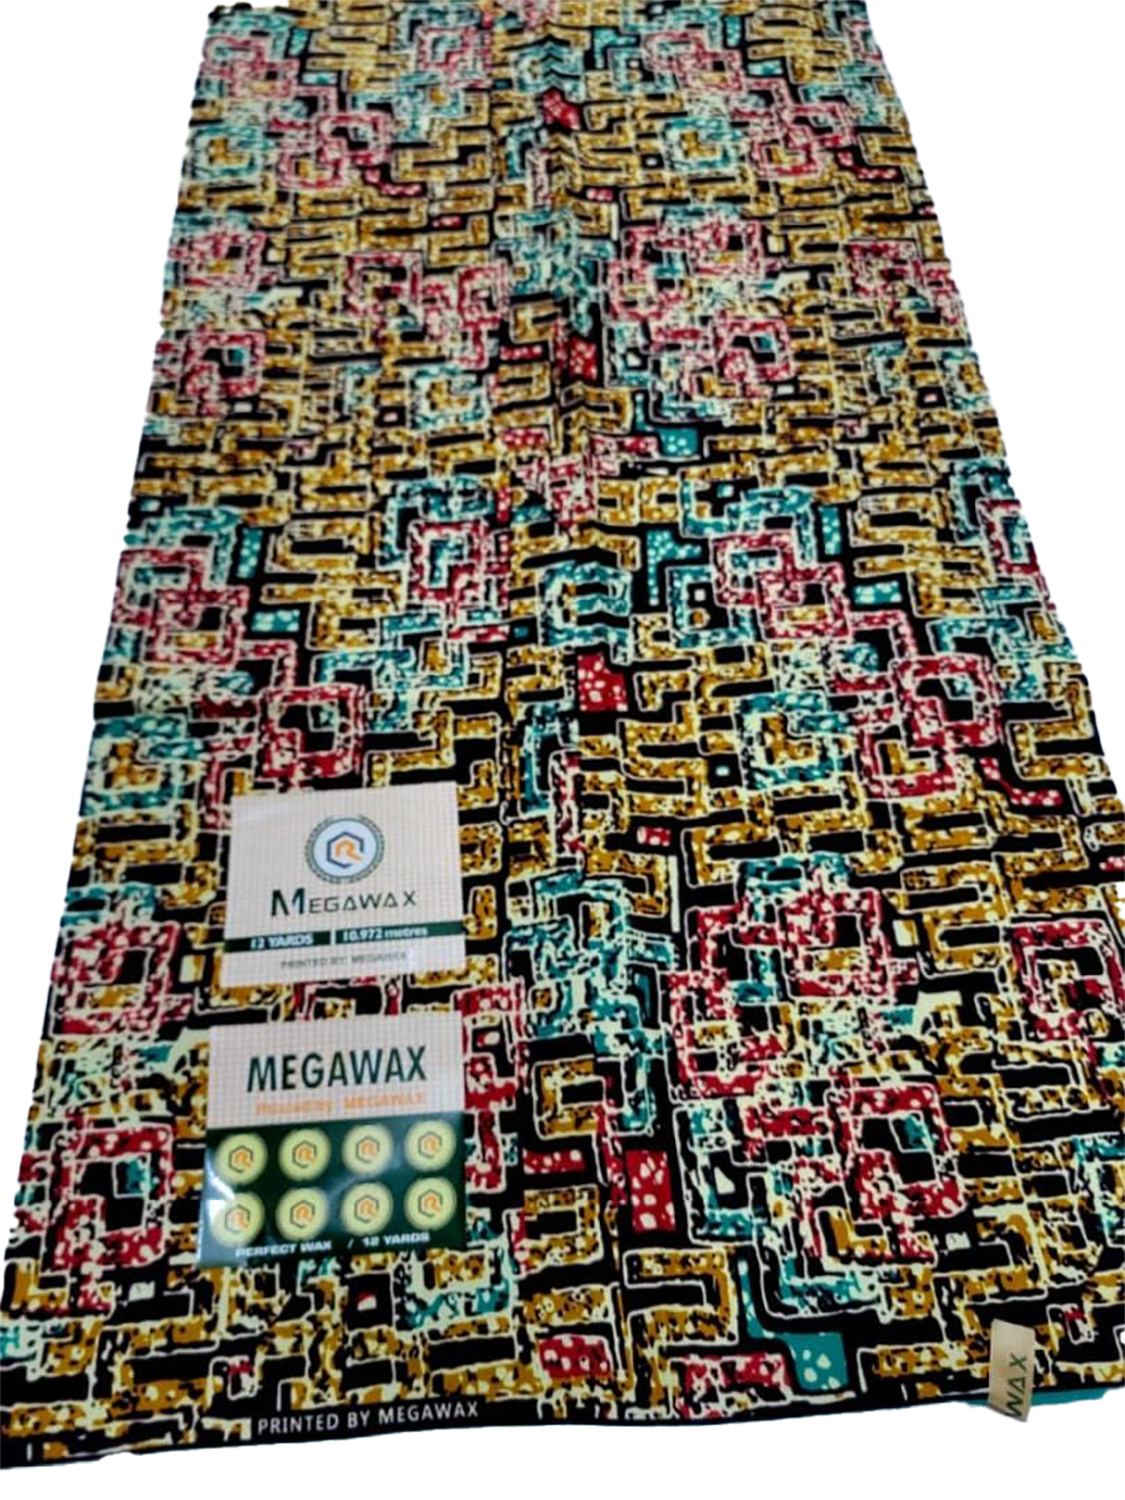 Premium Davida Wax Ankara Fabric 6Yards per Piece | TCK127a